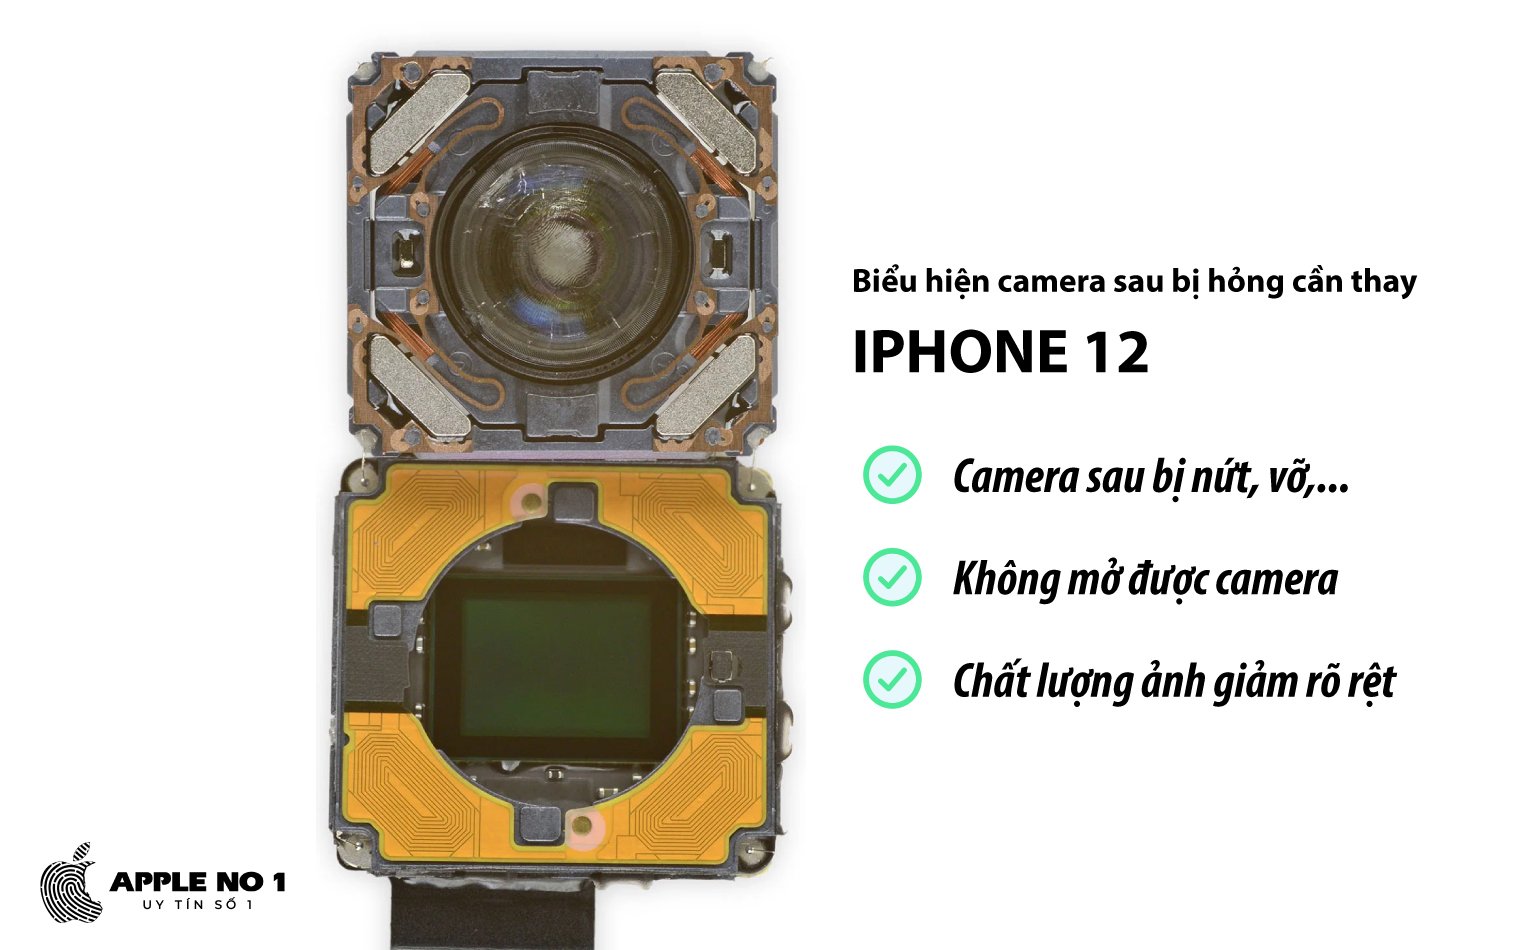 bieu hien camera sau bi hong can thay camera sau iphone 12